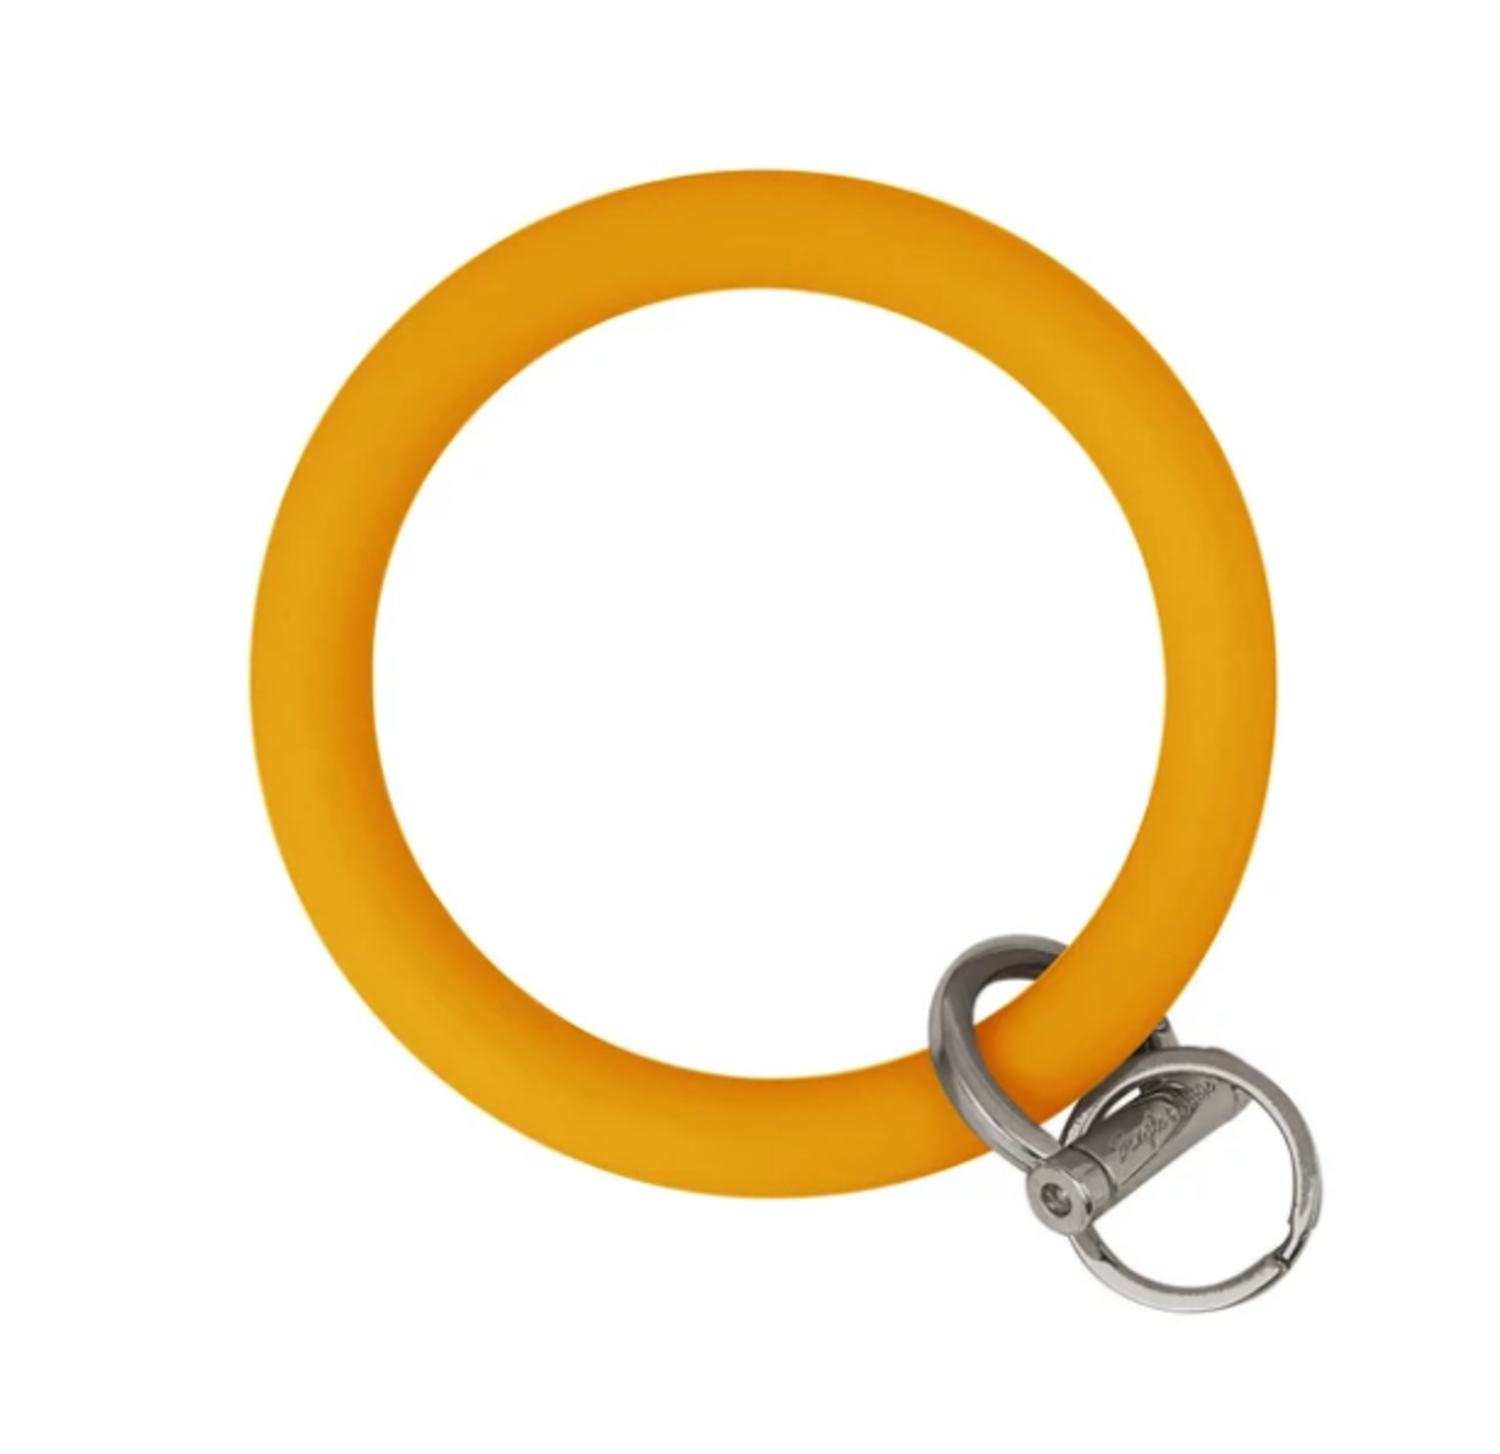 Silicon Key Ring Bracelet